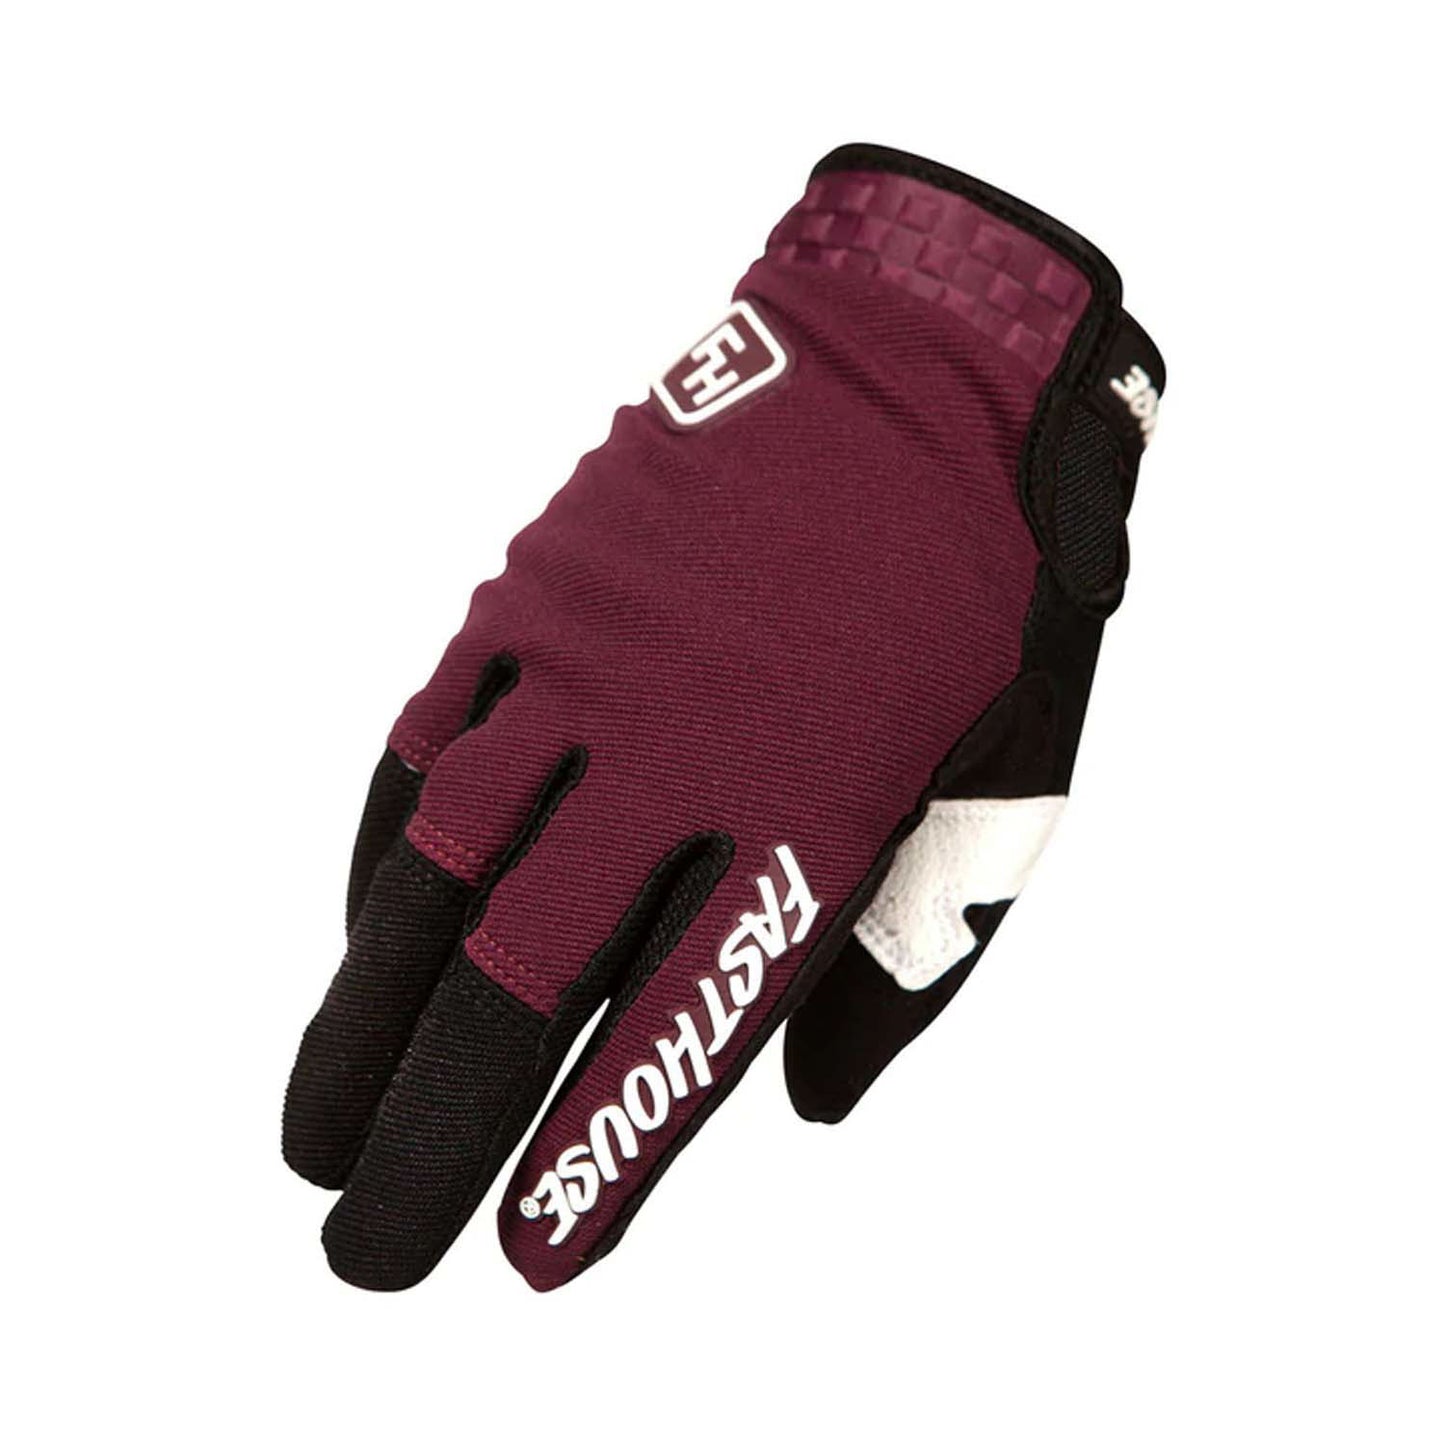 Fasthouse Youth Speed Style Glove Ridgeline - Maroon Black Bike Gloves